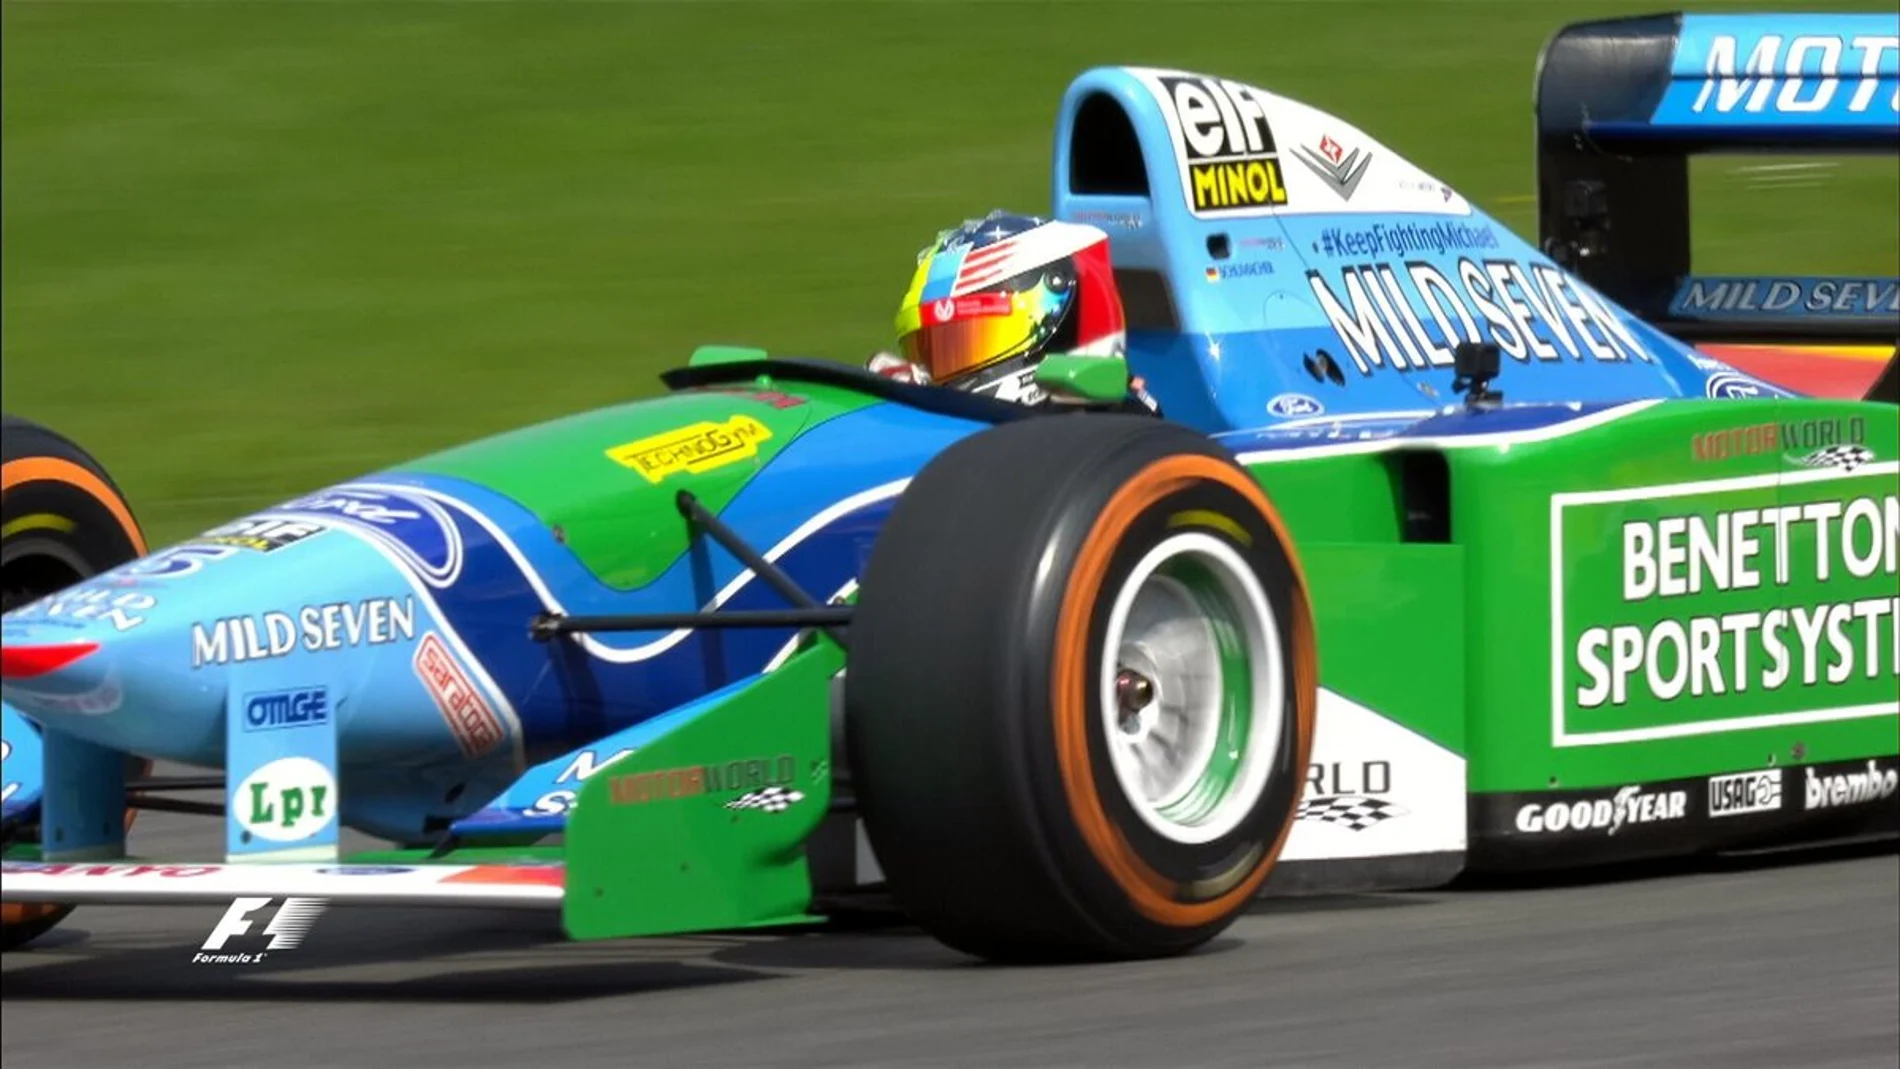 Mick Schumacher con el Benetton